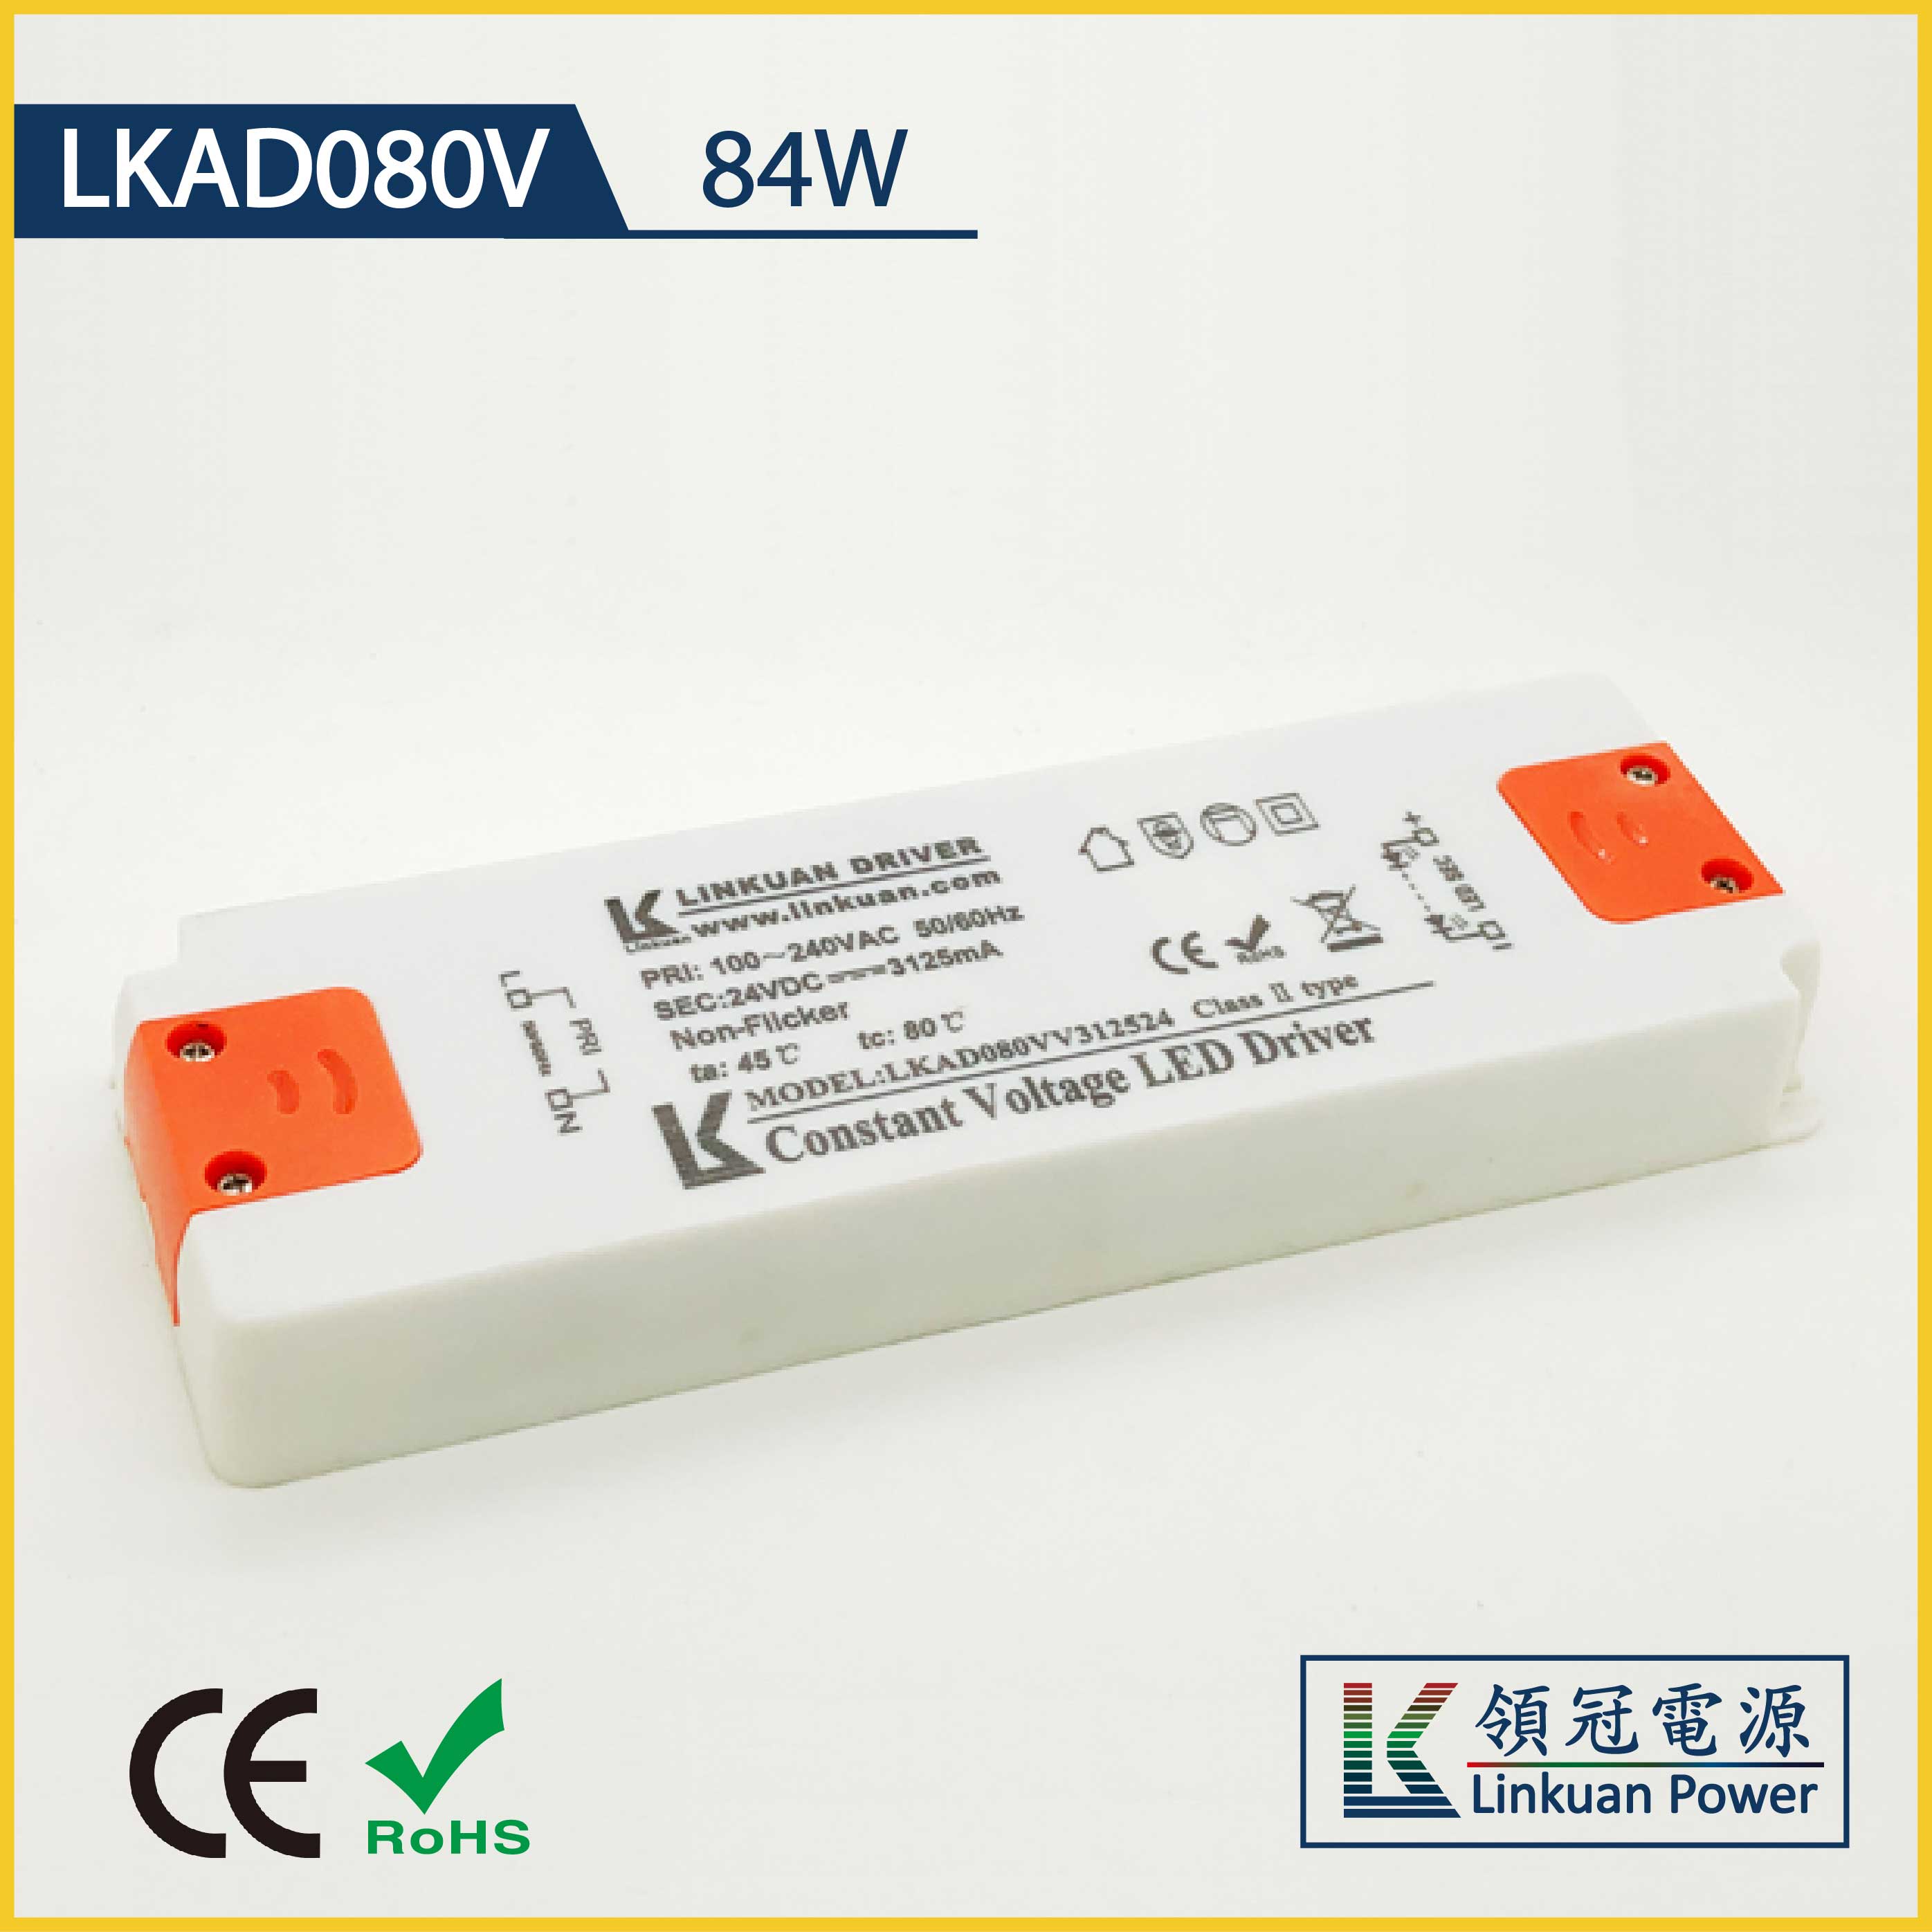 LKAD080V 84W constant voltage 12V/24V 7A/3.5A slim led driver